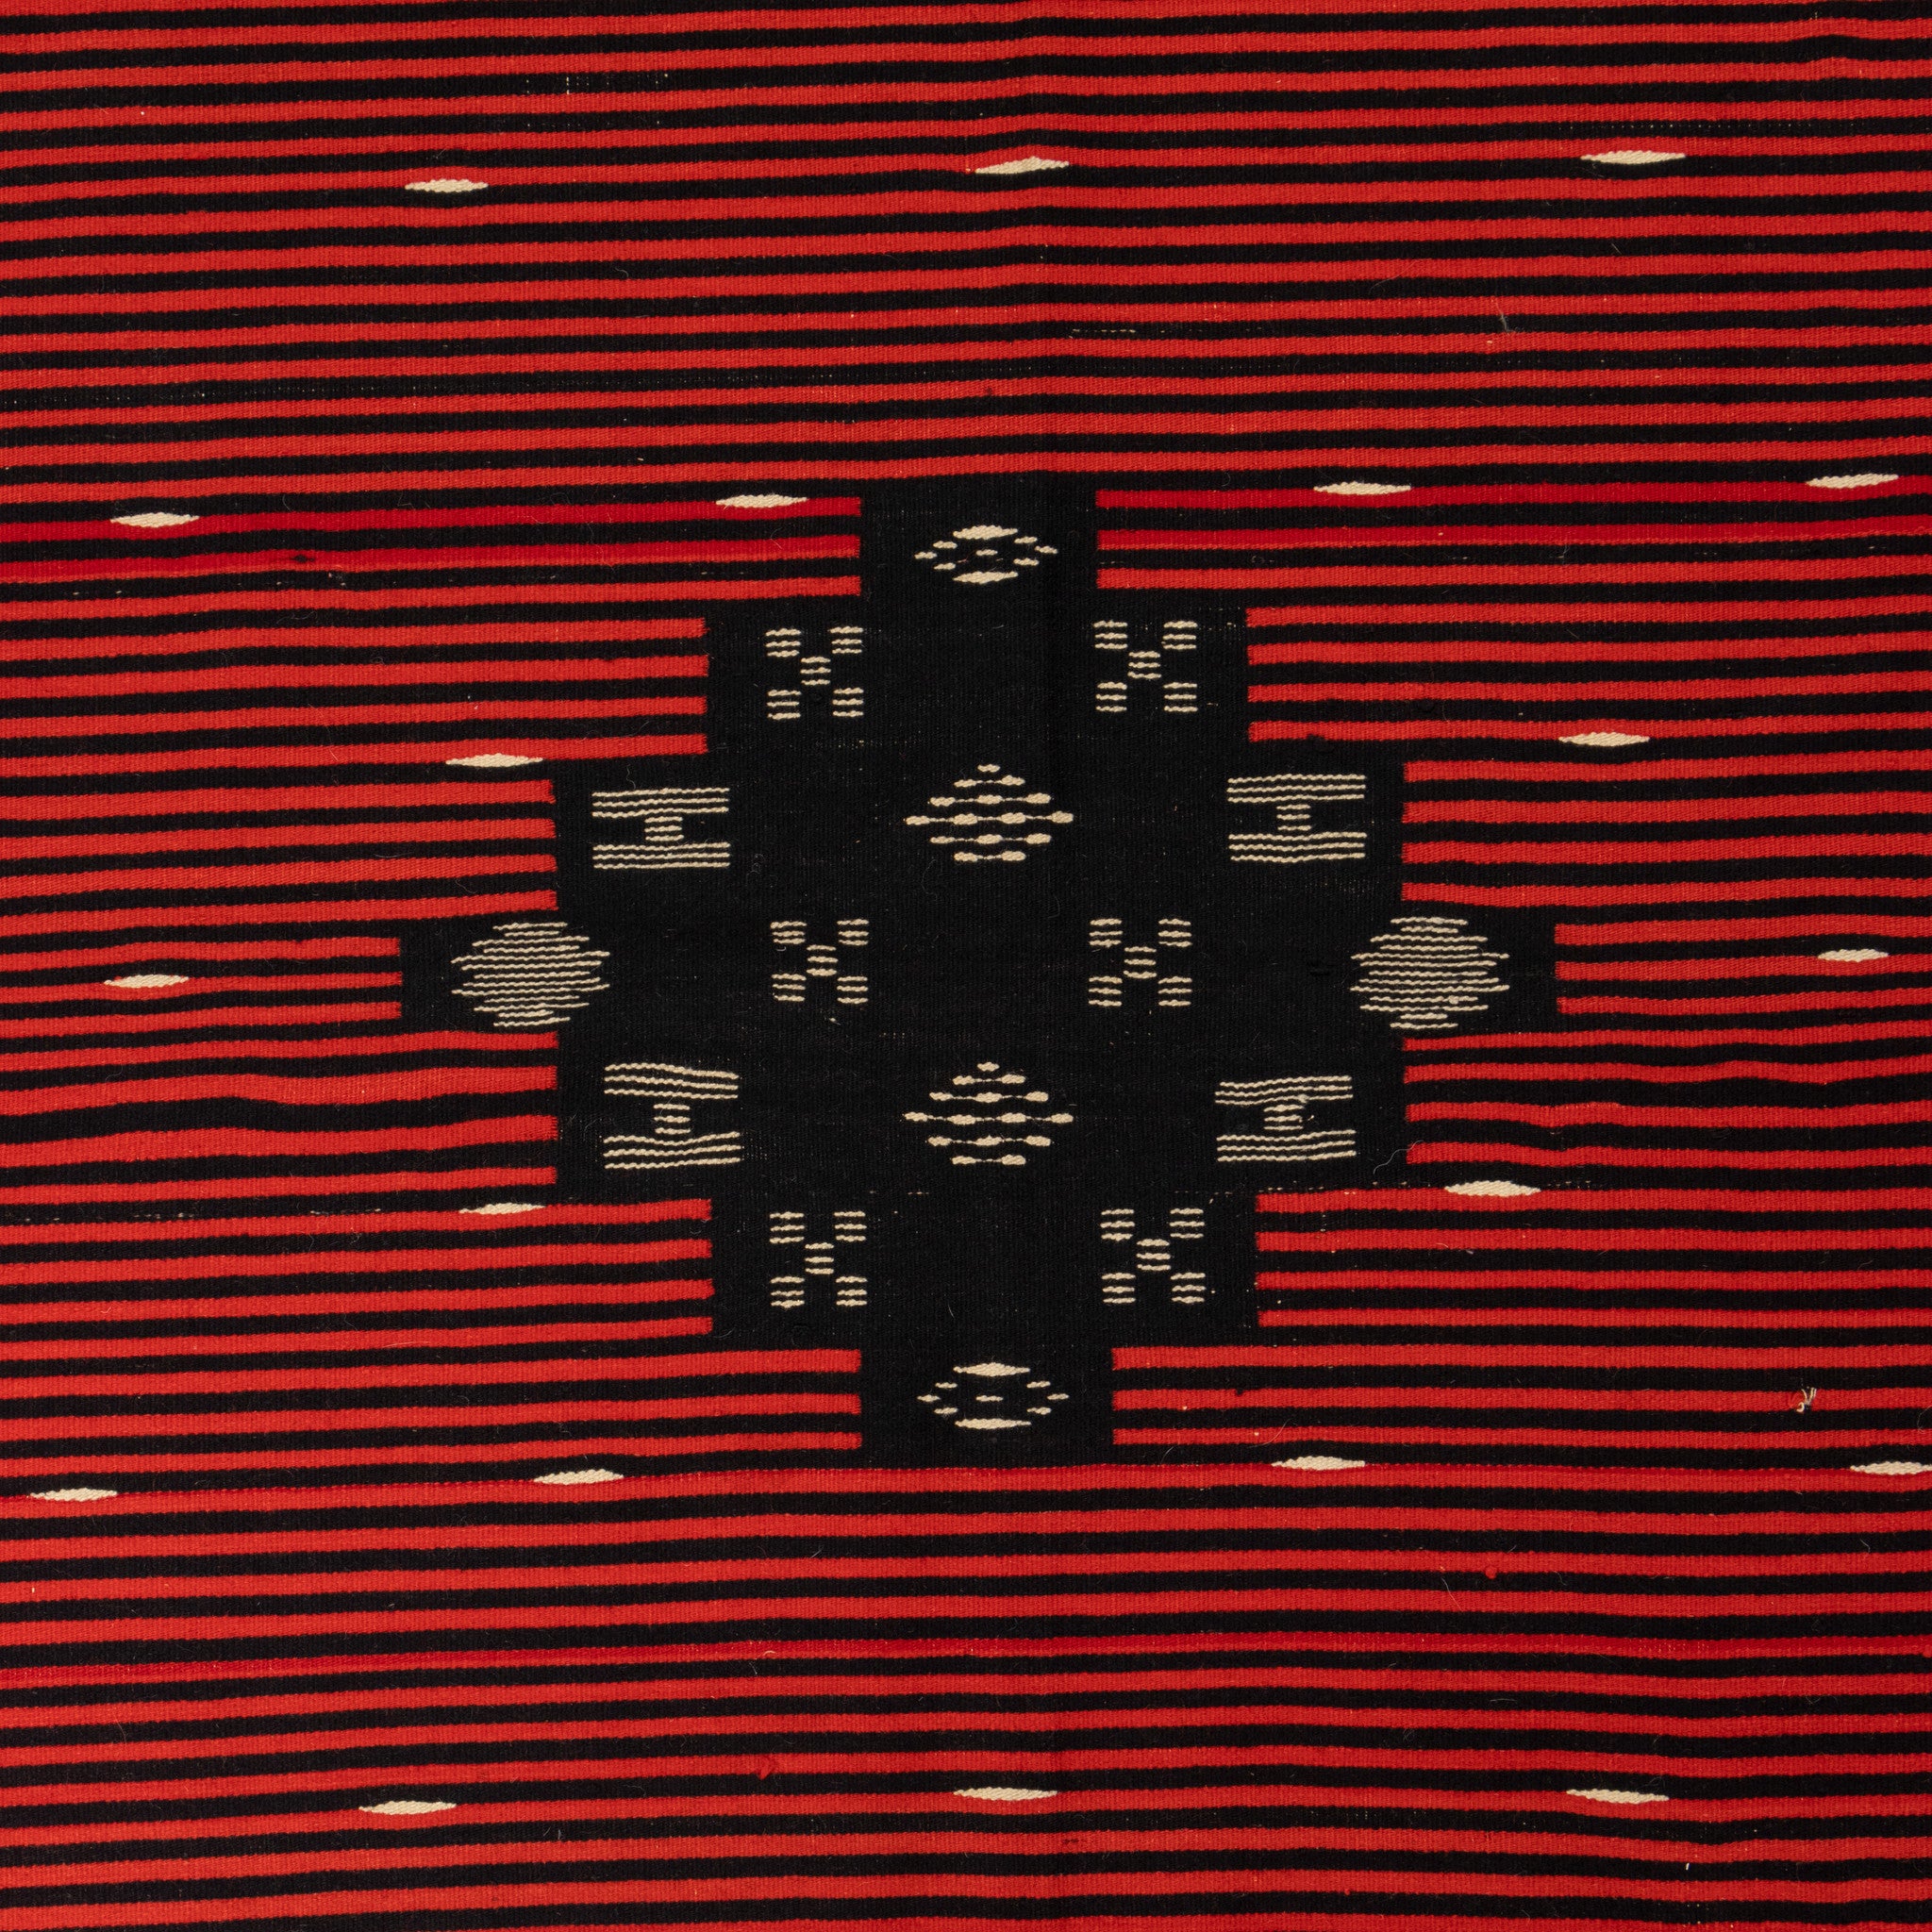 Mexican Serape Weaving